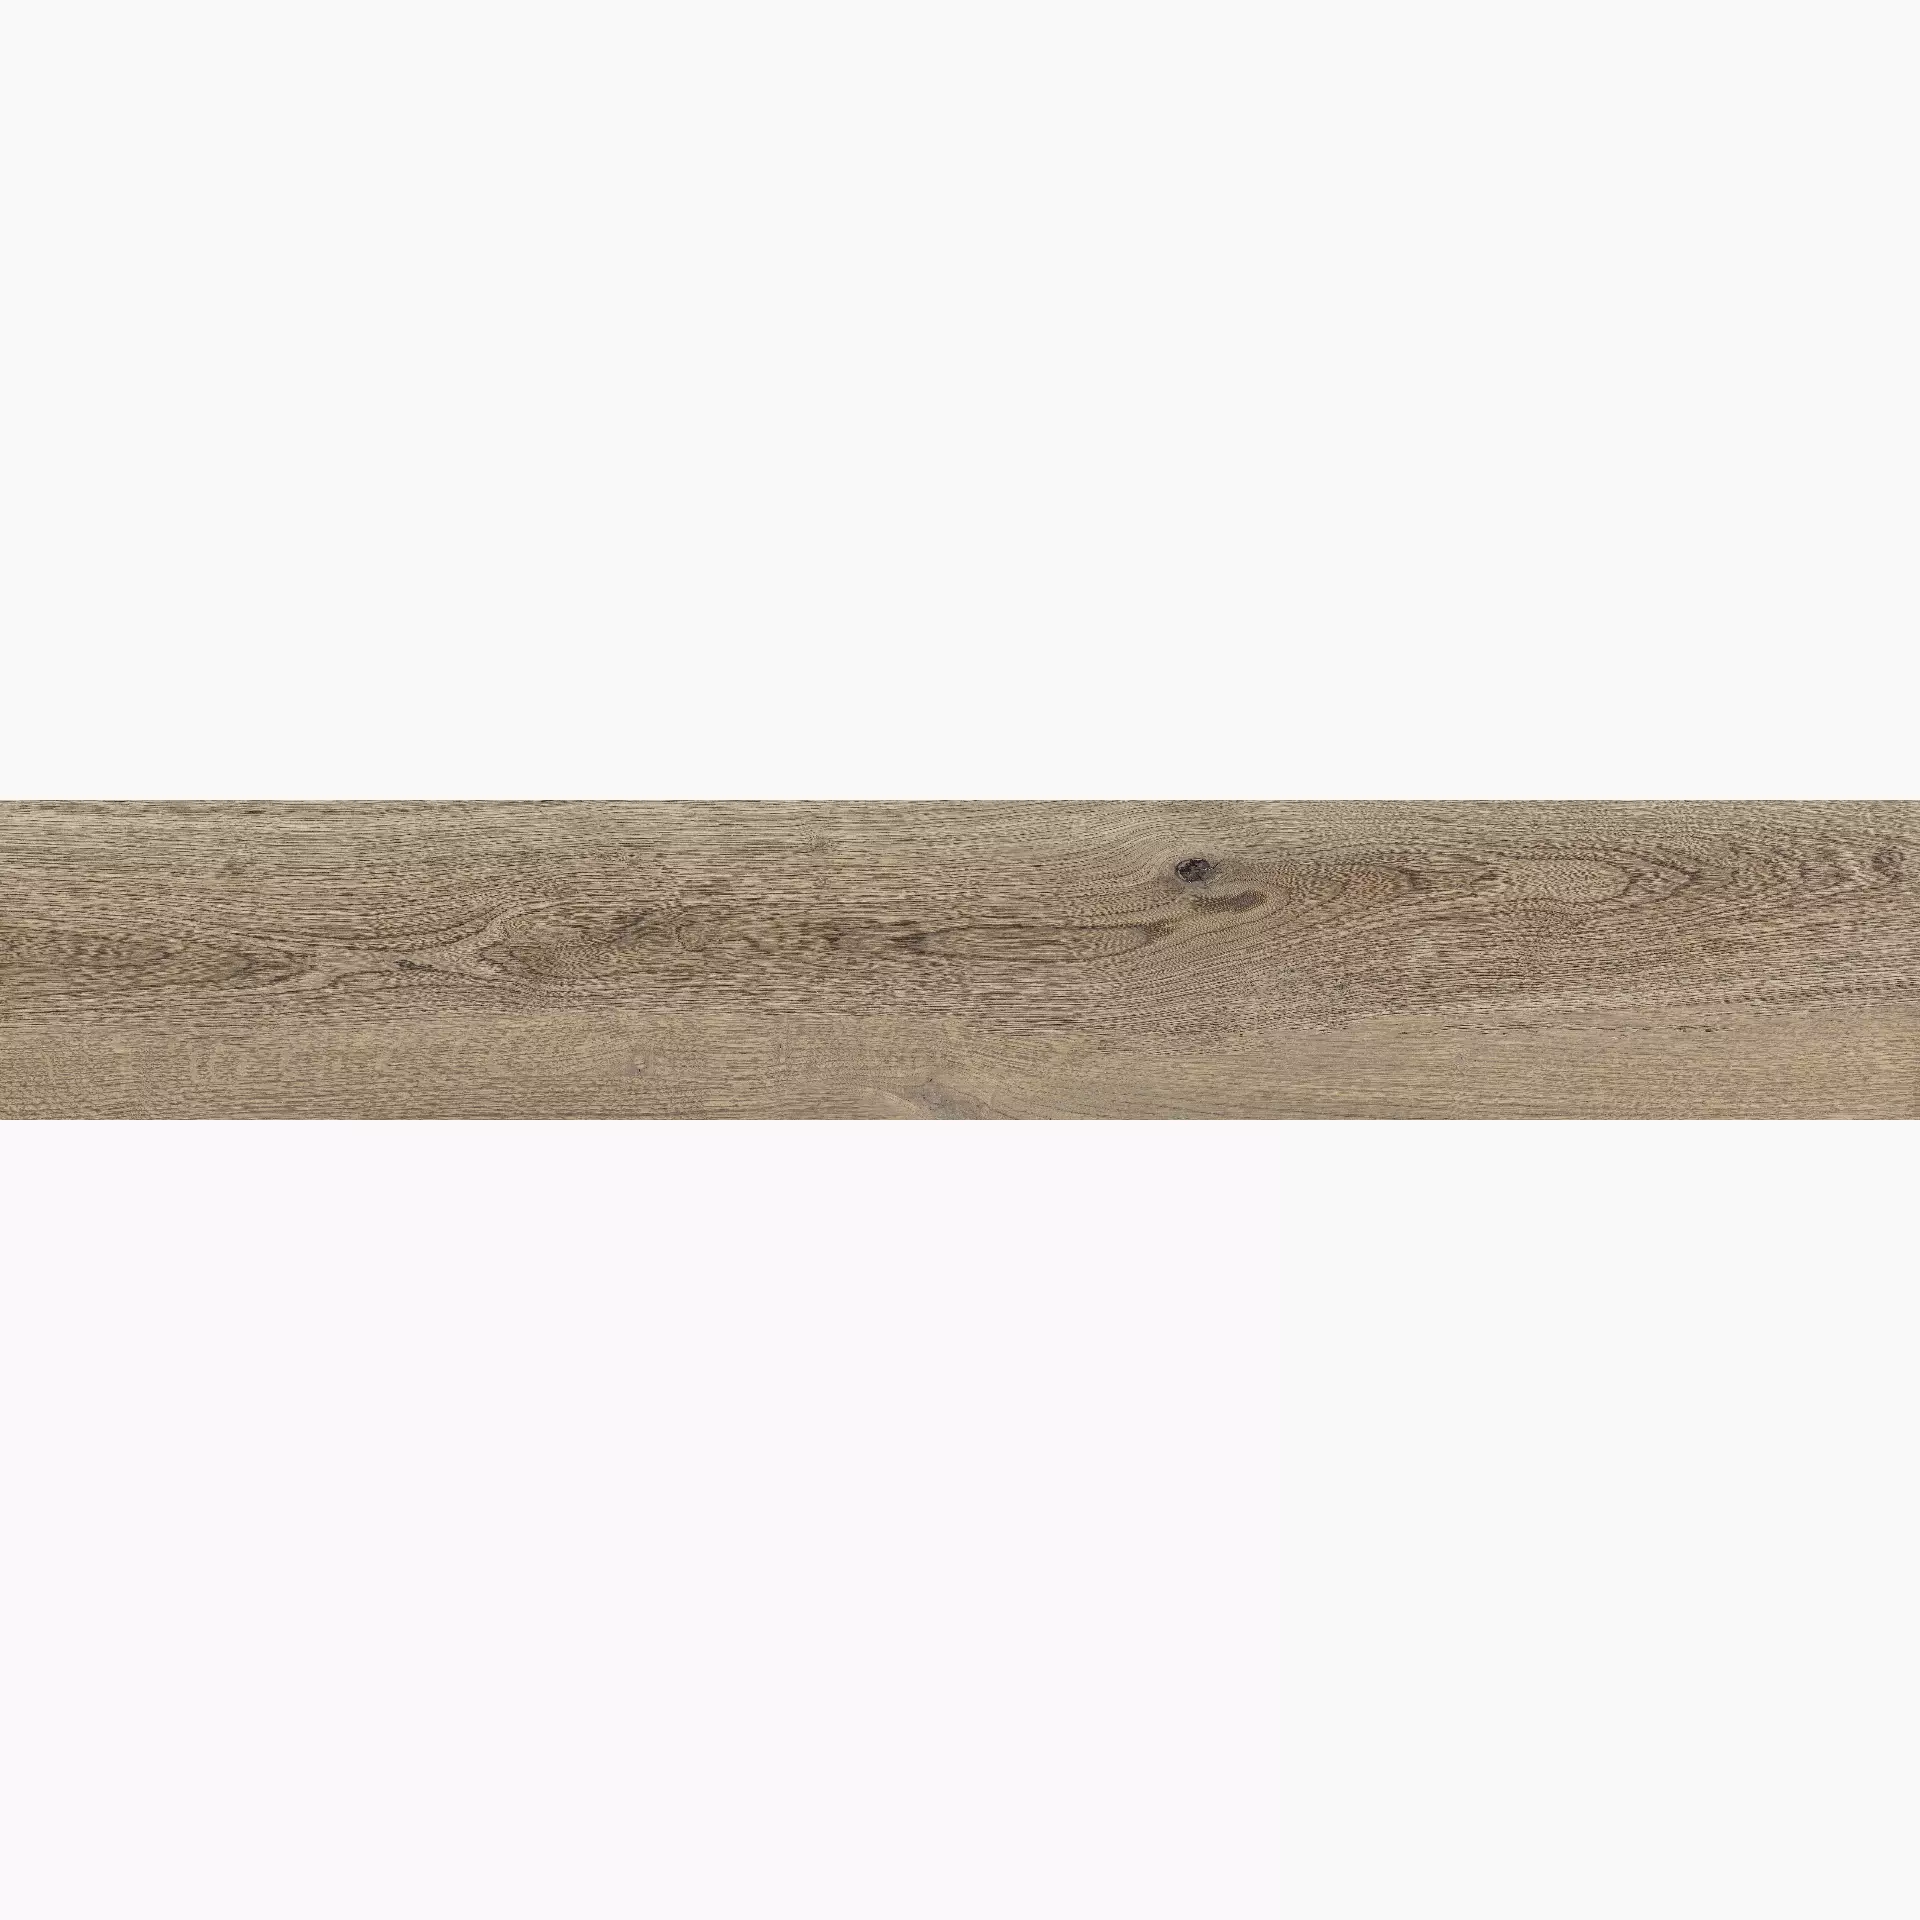 ABK Poetry Wood Oak Naturale Oak PF60010060 natur 20x120cm rektifiziert 8,5mm